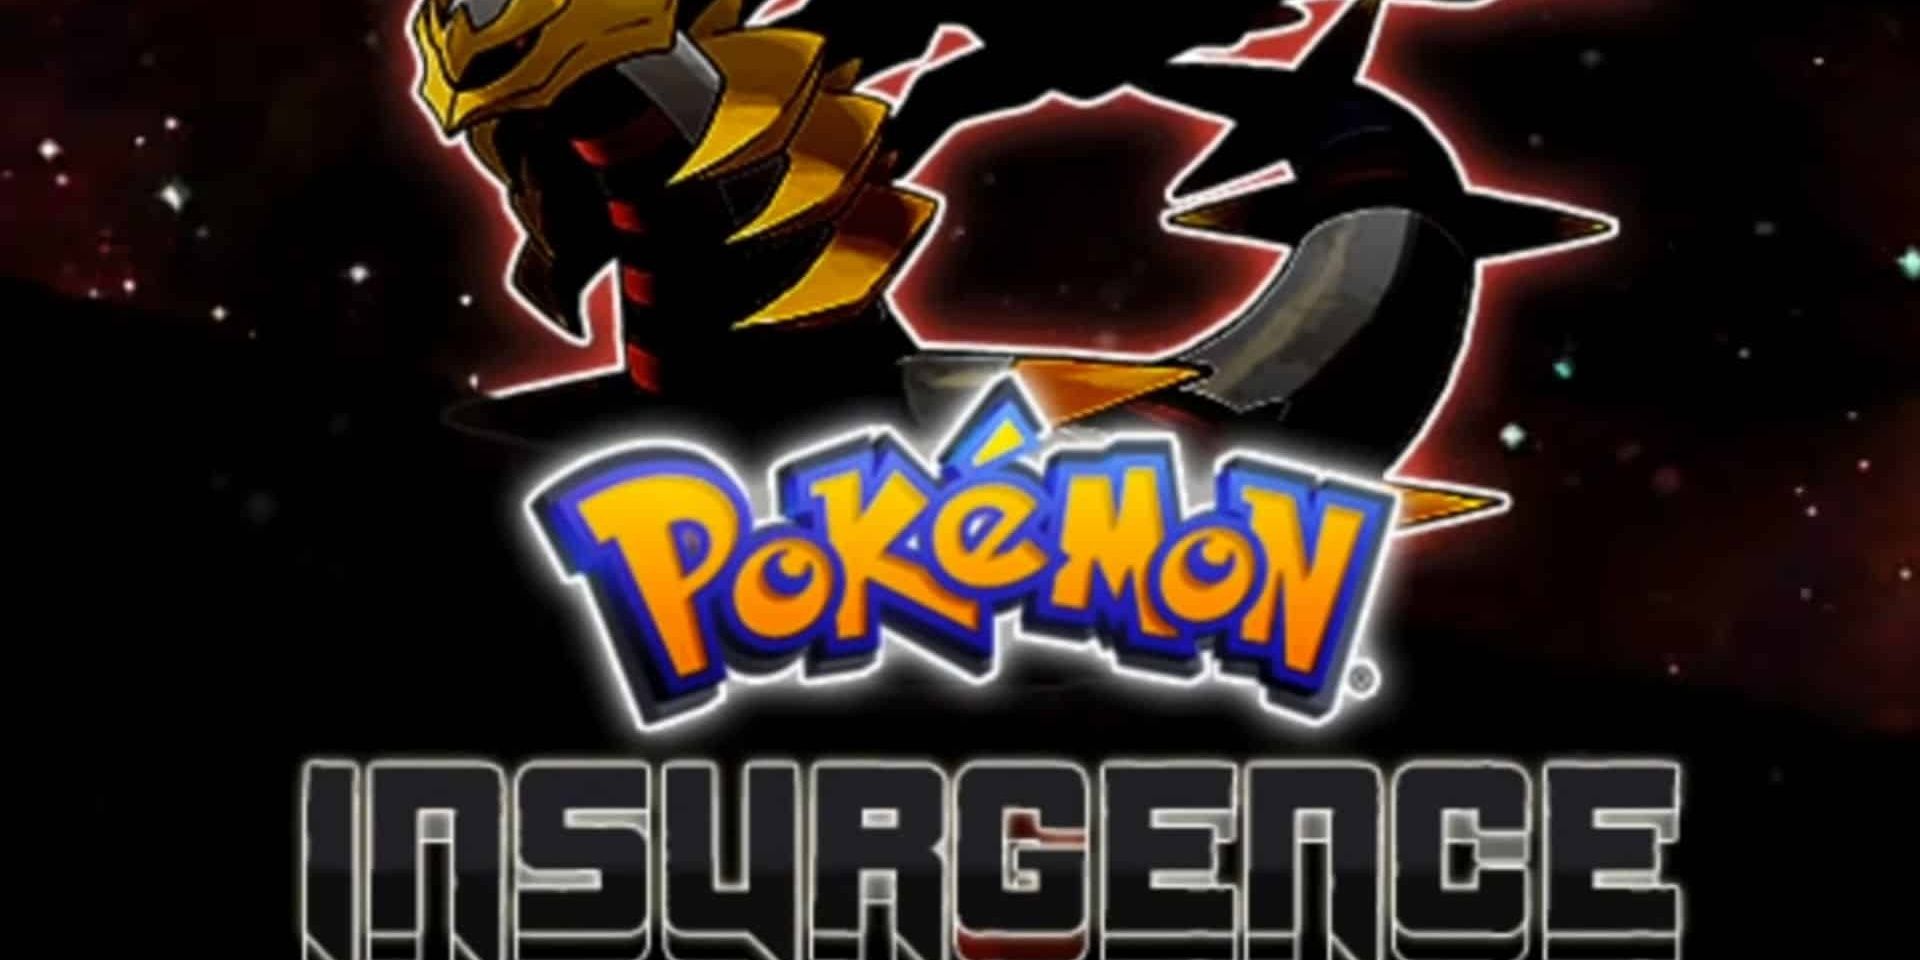 Giratina floats on the title screen of Pokemon Insurgence